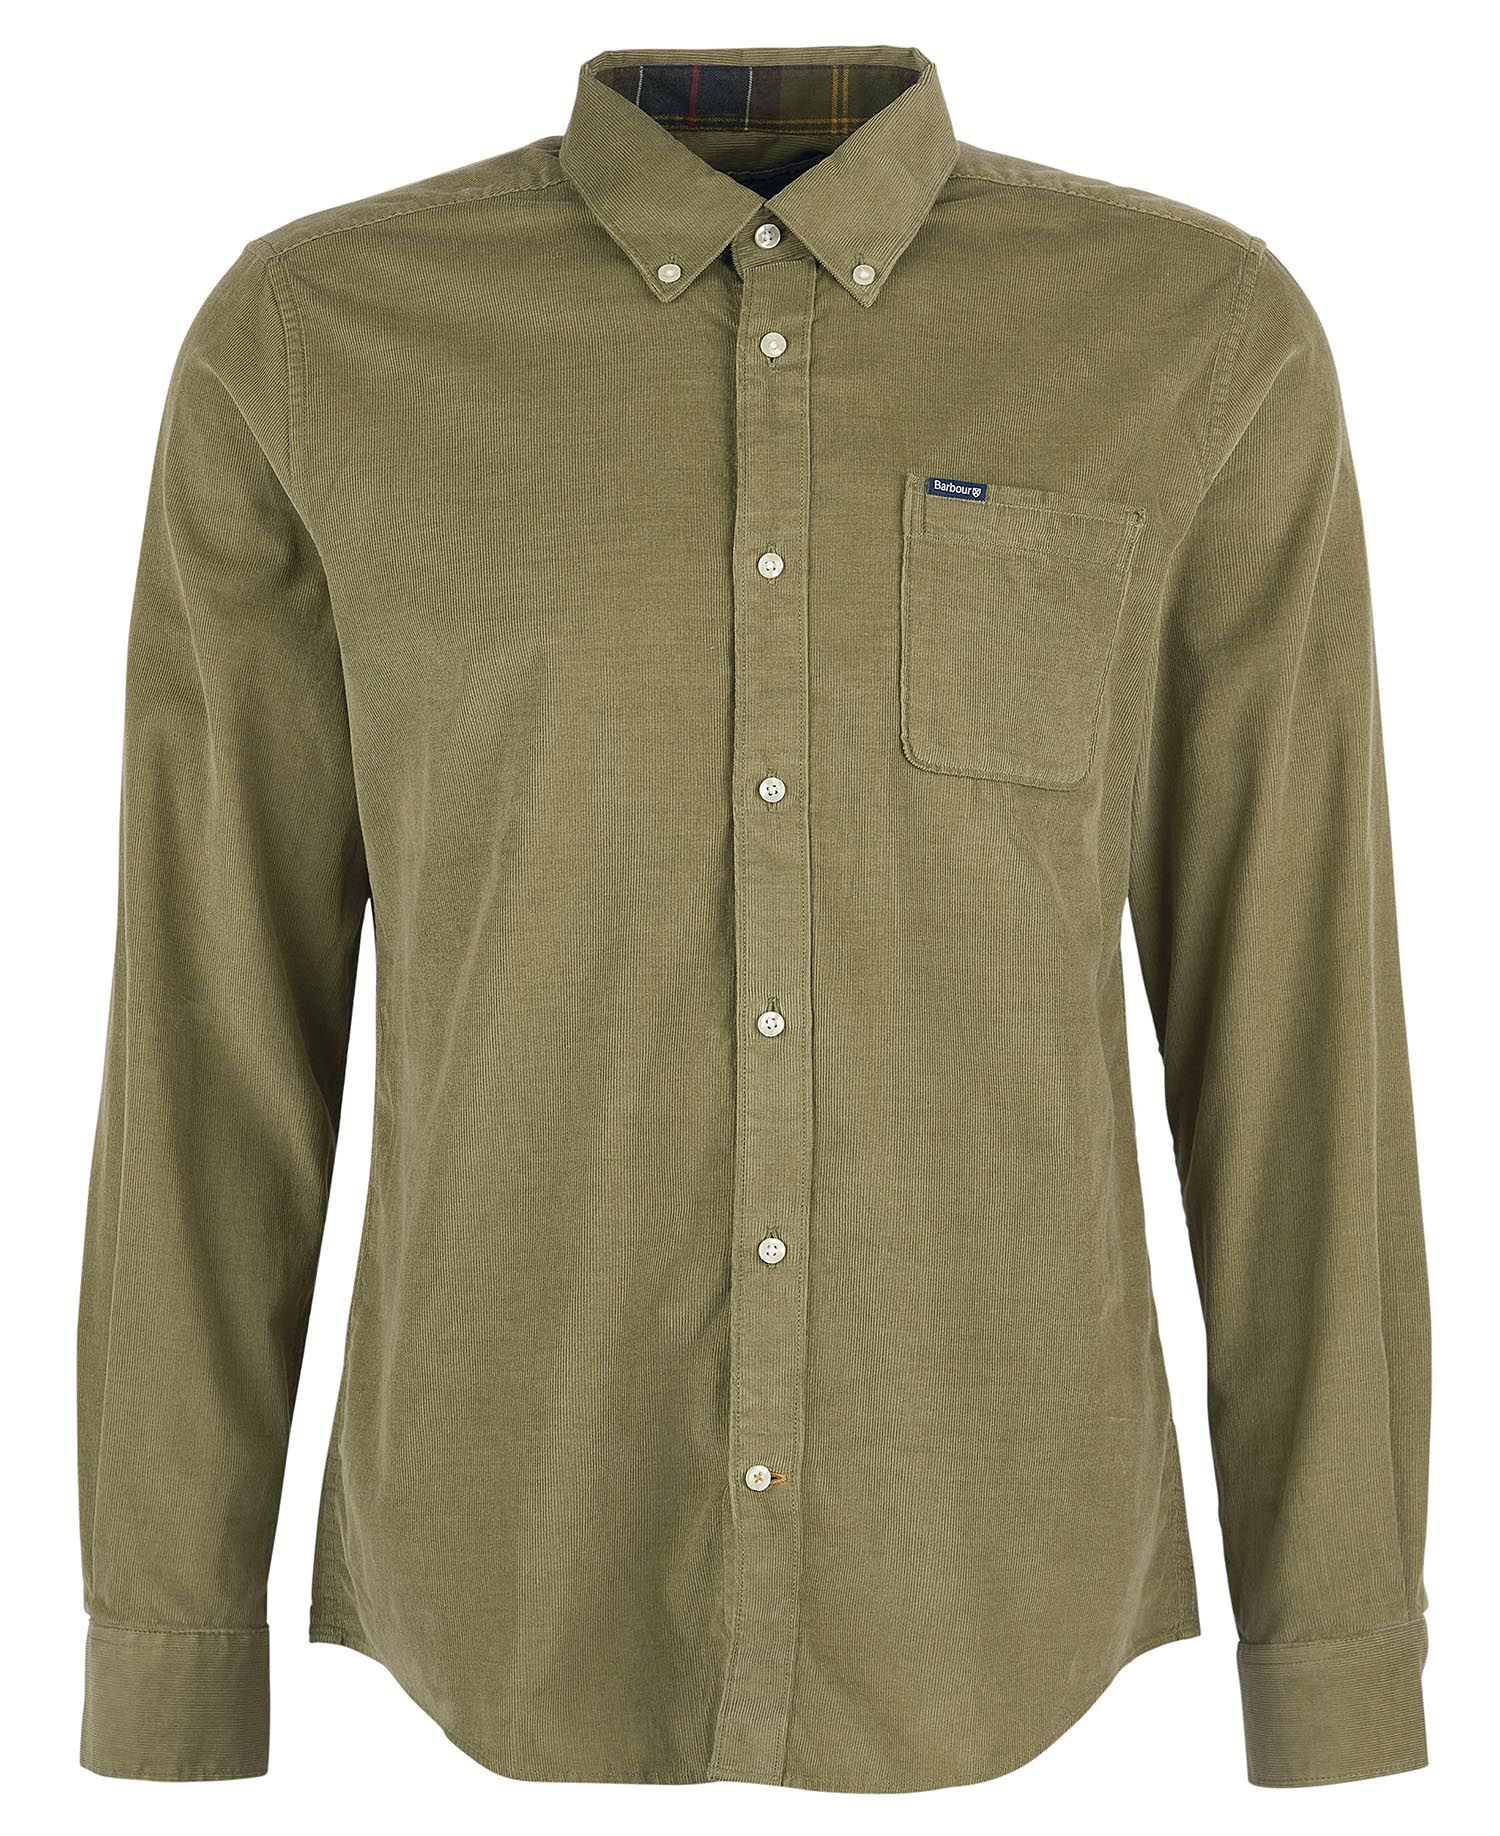 Ramsey Tailored Shirt - Rivers & Glen Trading Co.